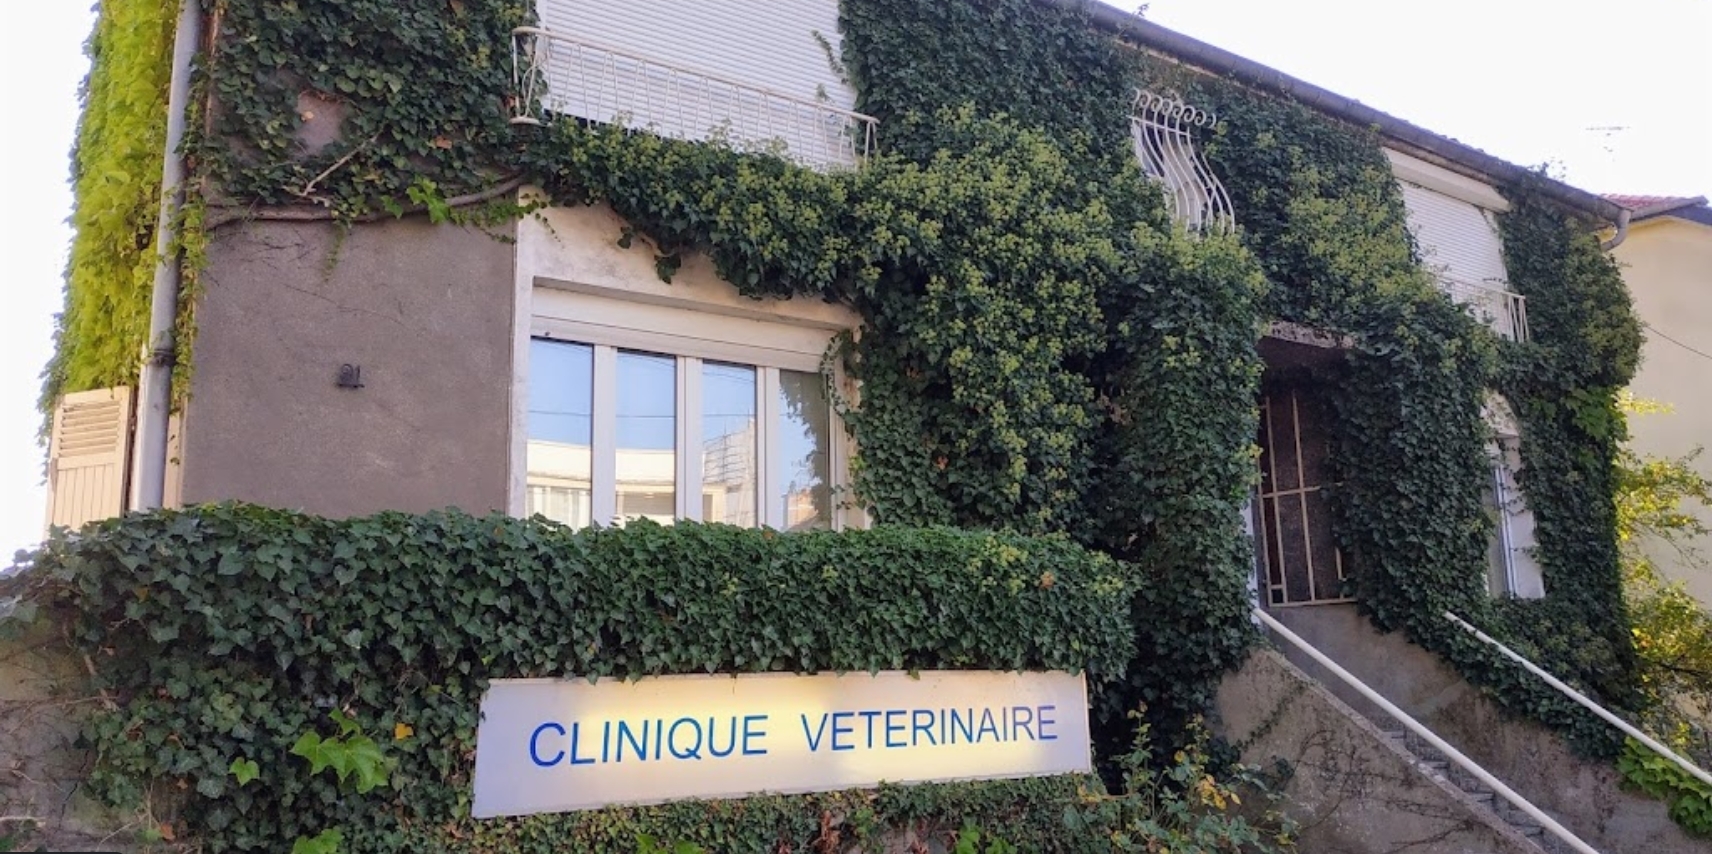 Clinique veterinaire Univet Metz Facade